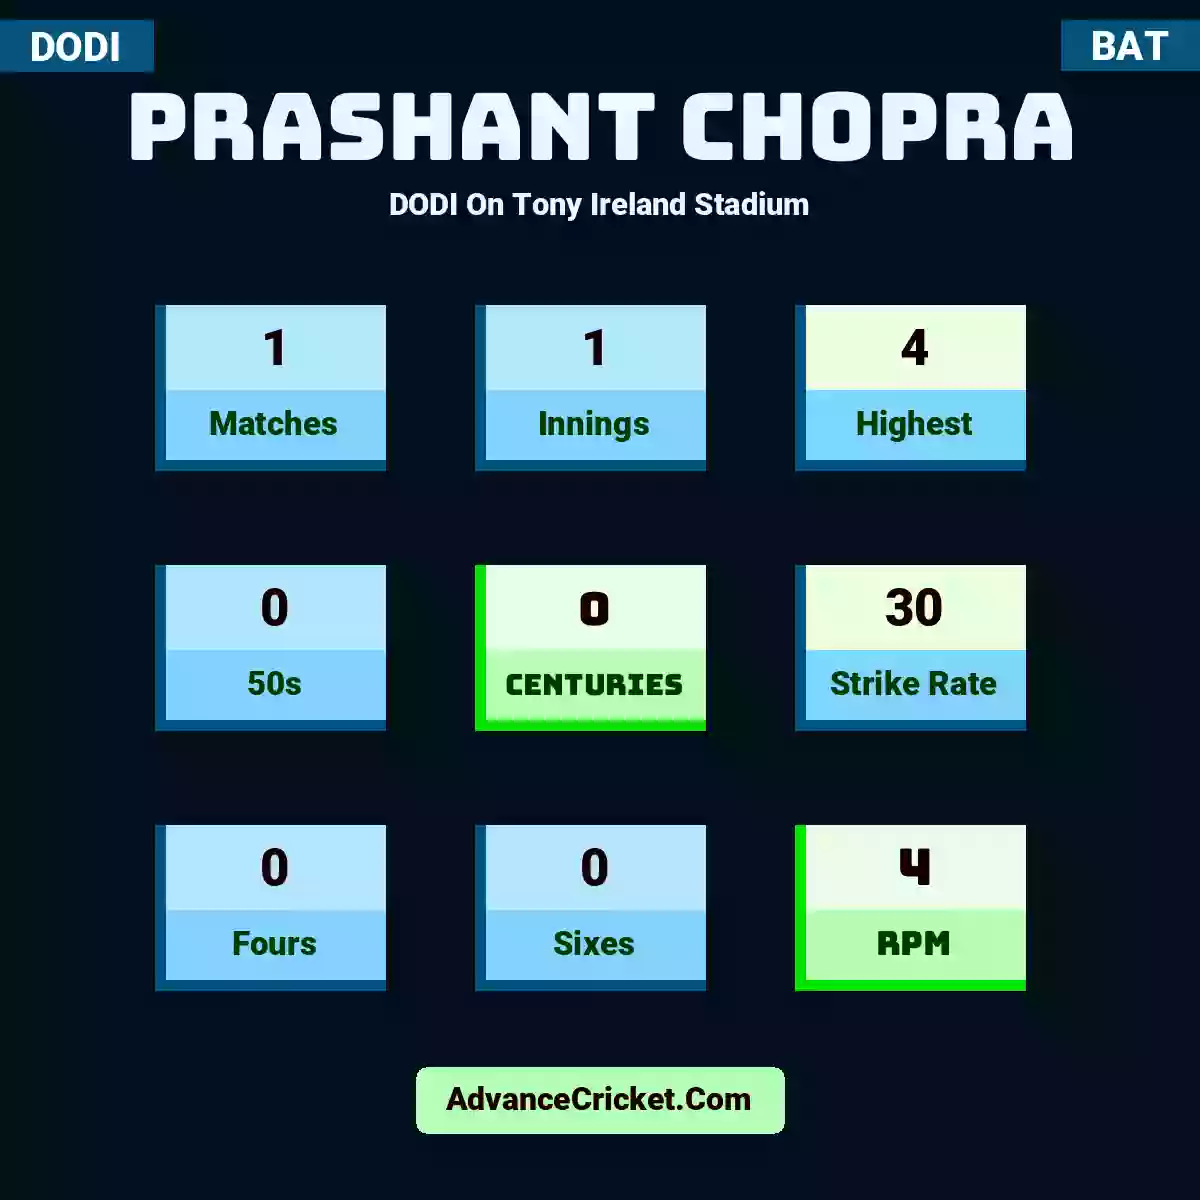 Prashant Chopra DODI  On Tony Ireland Stadium, Prashant Chopra played 1 matches, scored 4 runs as highest, 0 half-centuries, and 0 centuries, with a strike rate of 30. P.Chopra hit 0 fours and 0 sixes, with an RPM of 4.